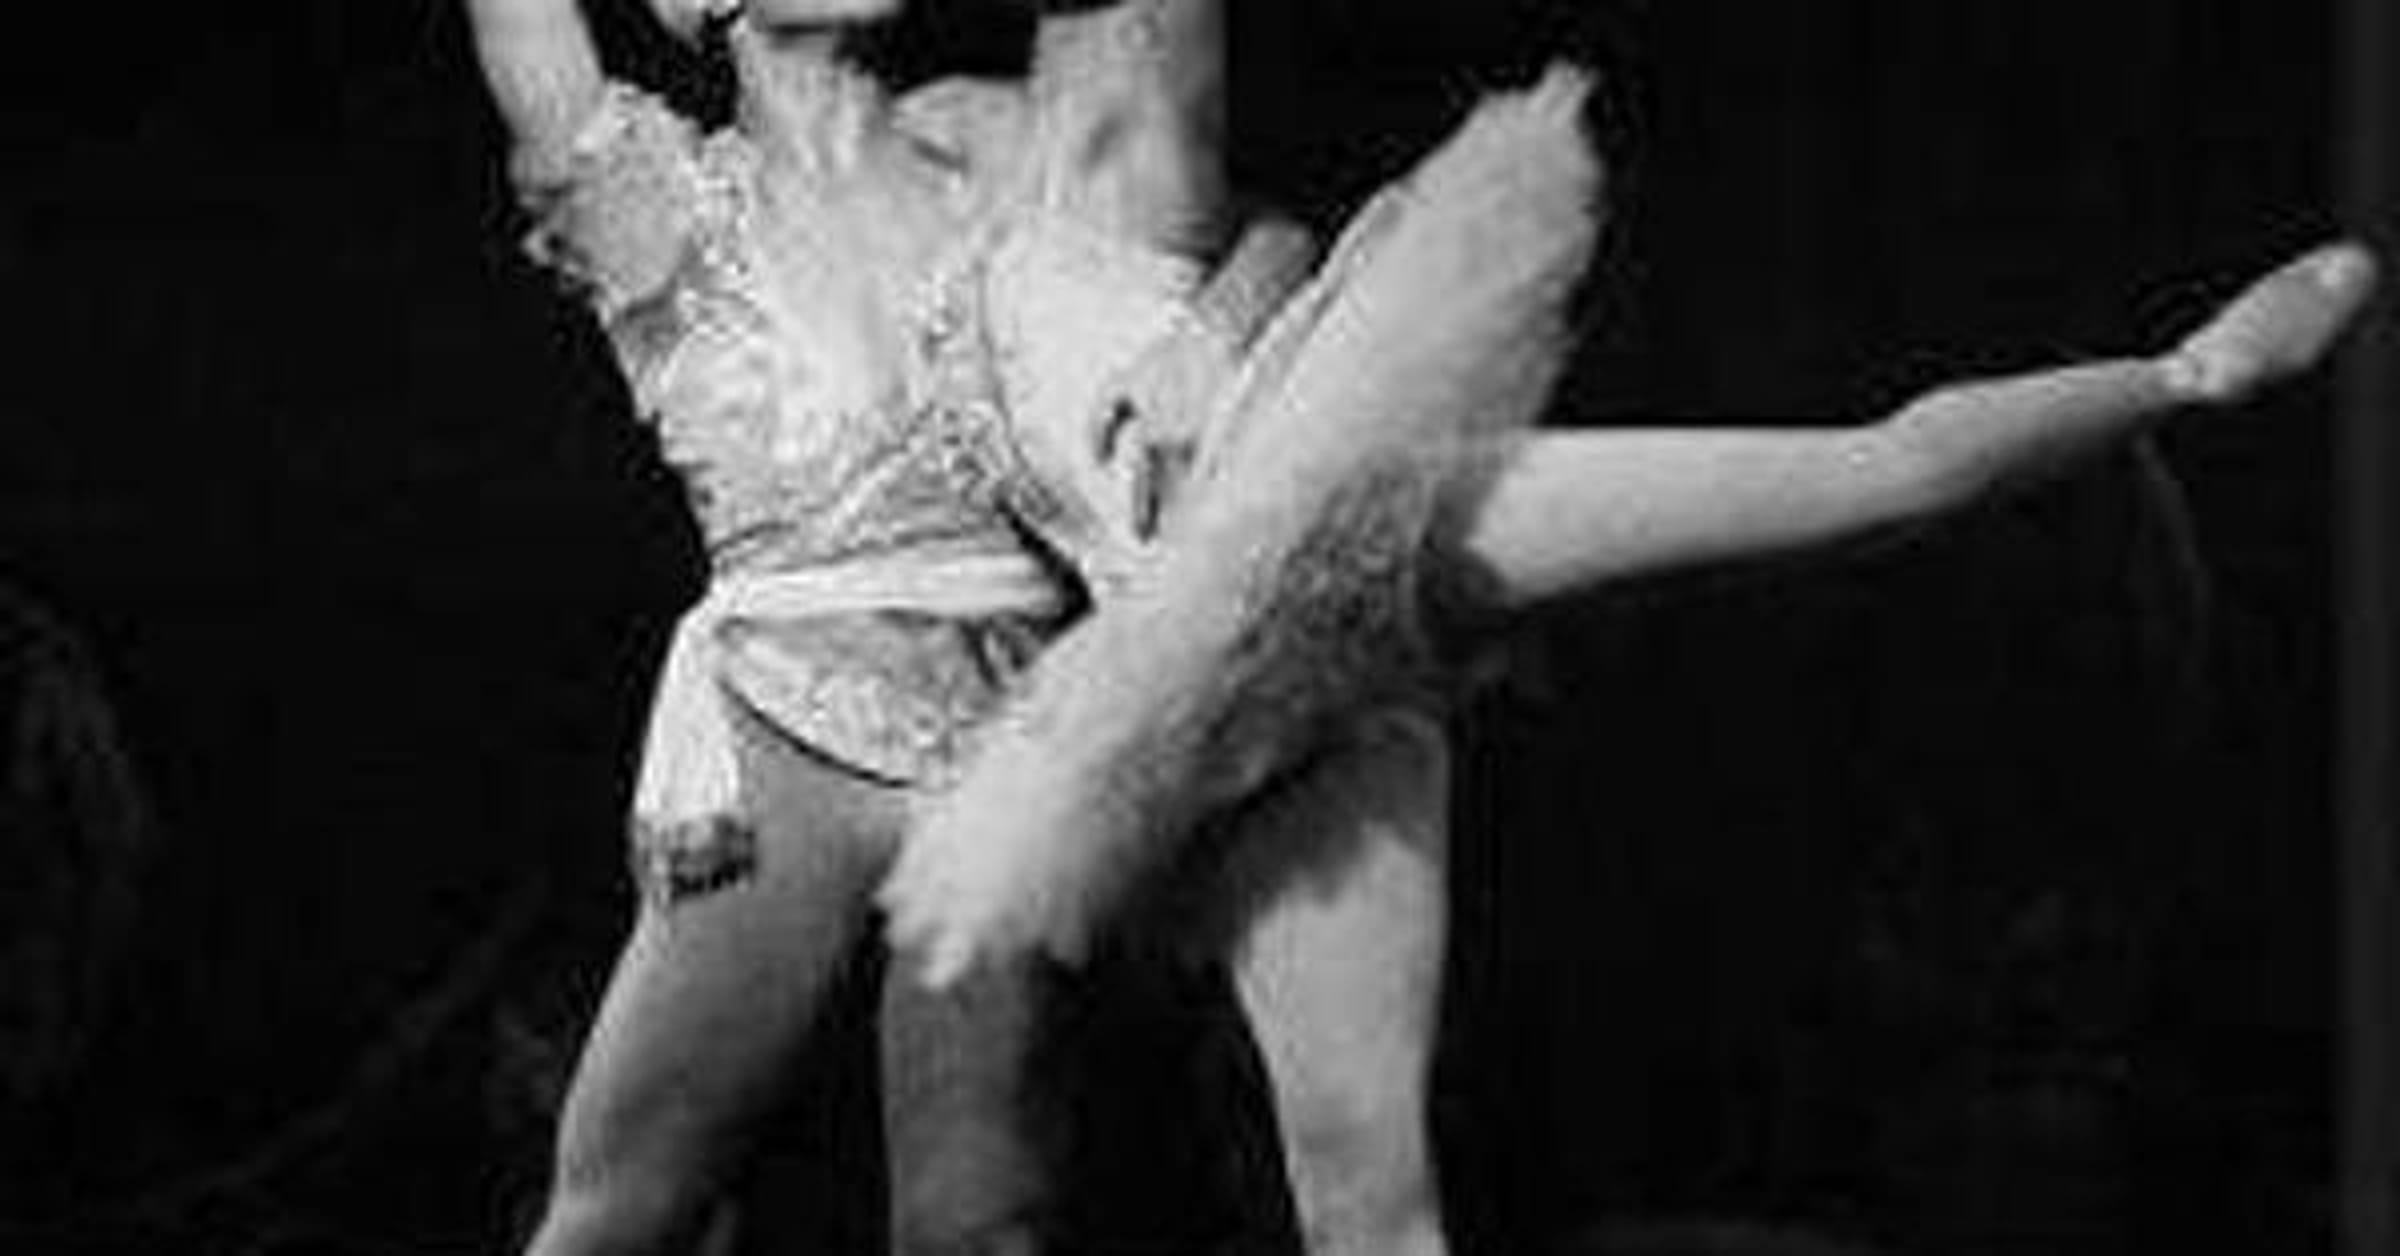 The Methods Series: Balanchine & Vaganova